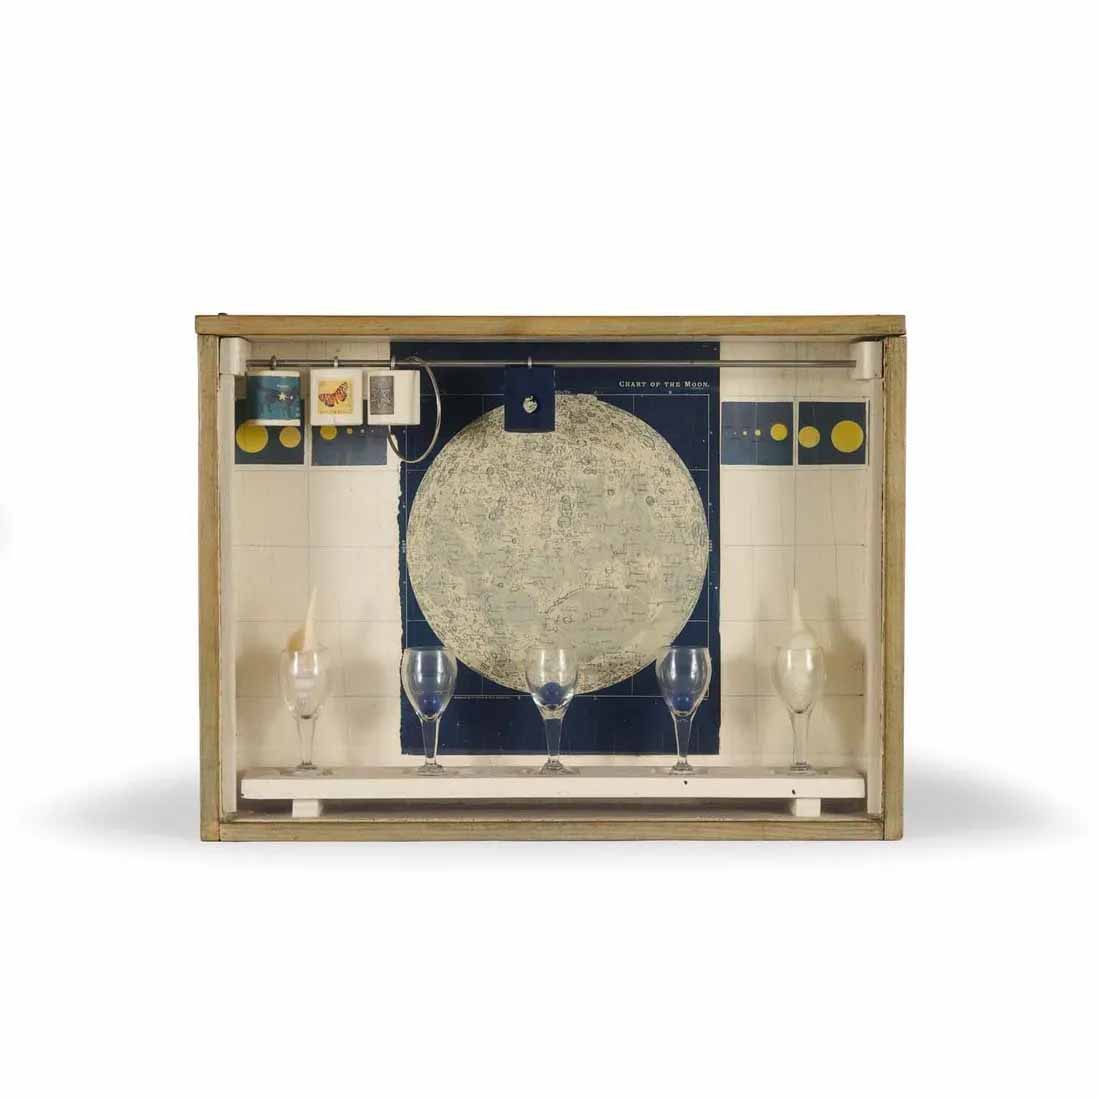 Joseph Cornell object-box titled Lunar Set (Soap Bubble Set, Lunar Variant), estimated at €200,000-€300,000 ($217,000-$325,000) at Piasa.